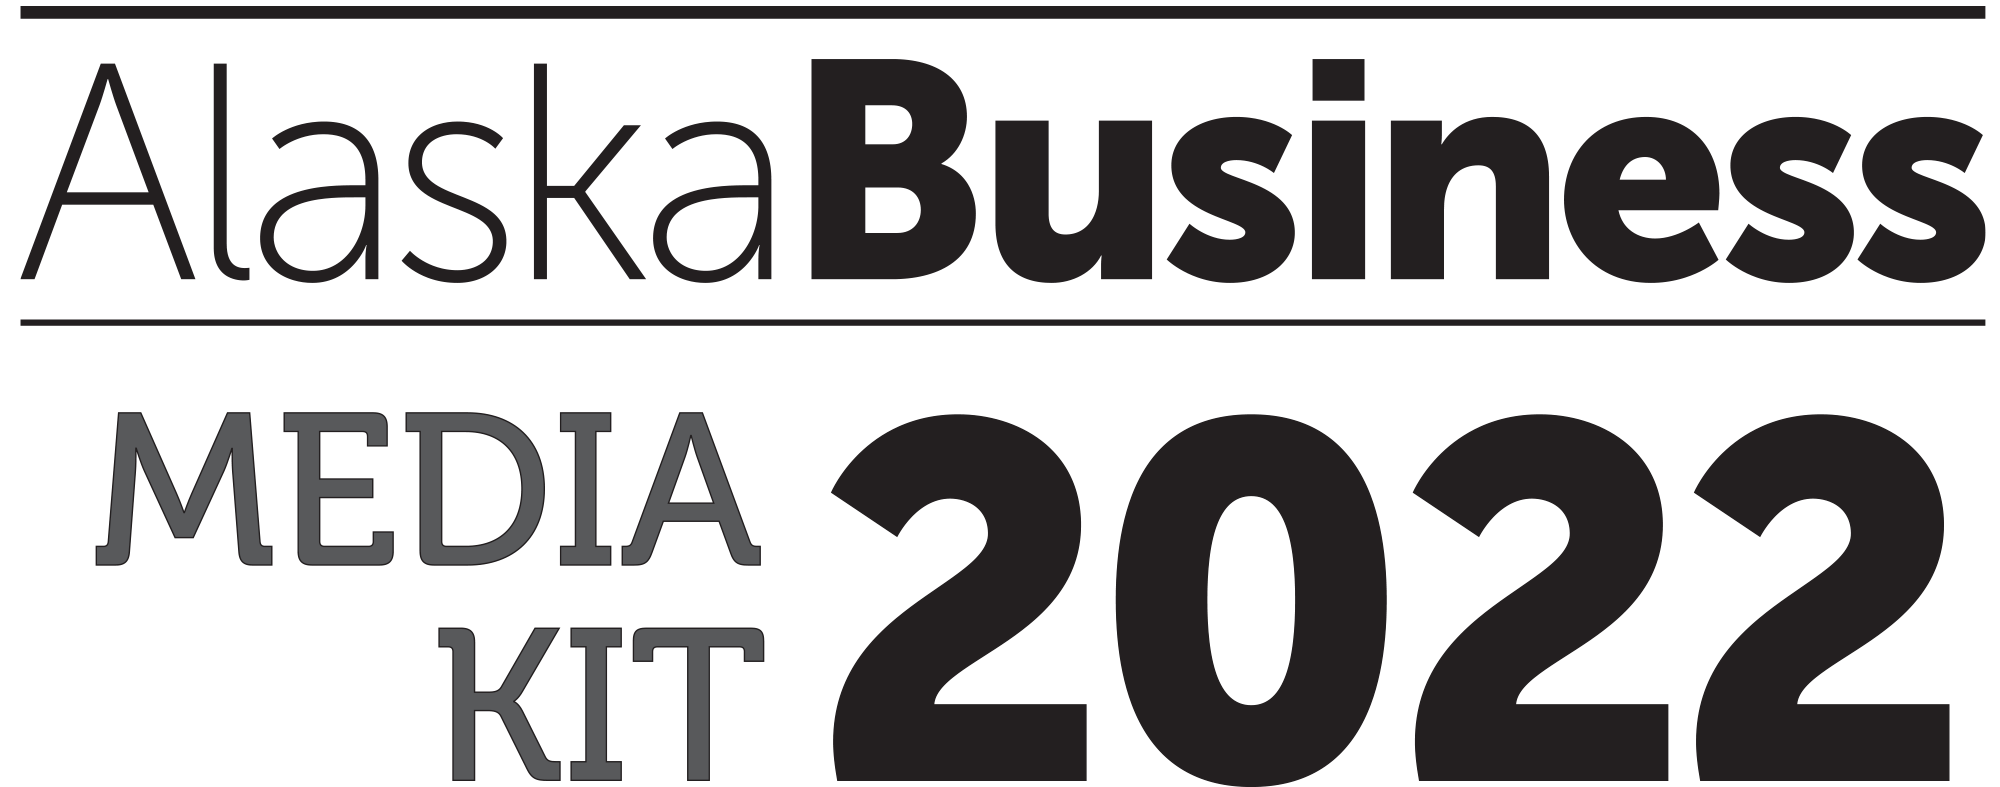 Alaska Business Media Kit 2022 logo